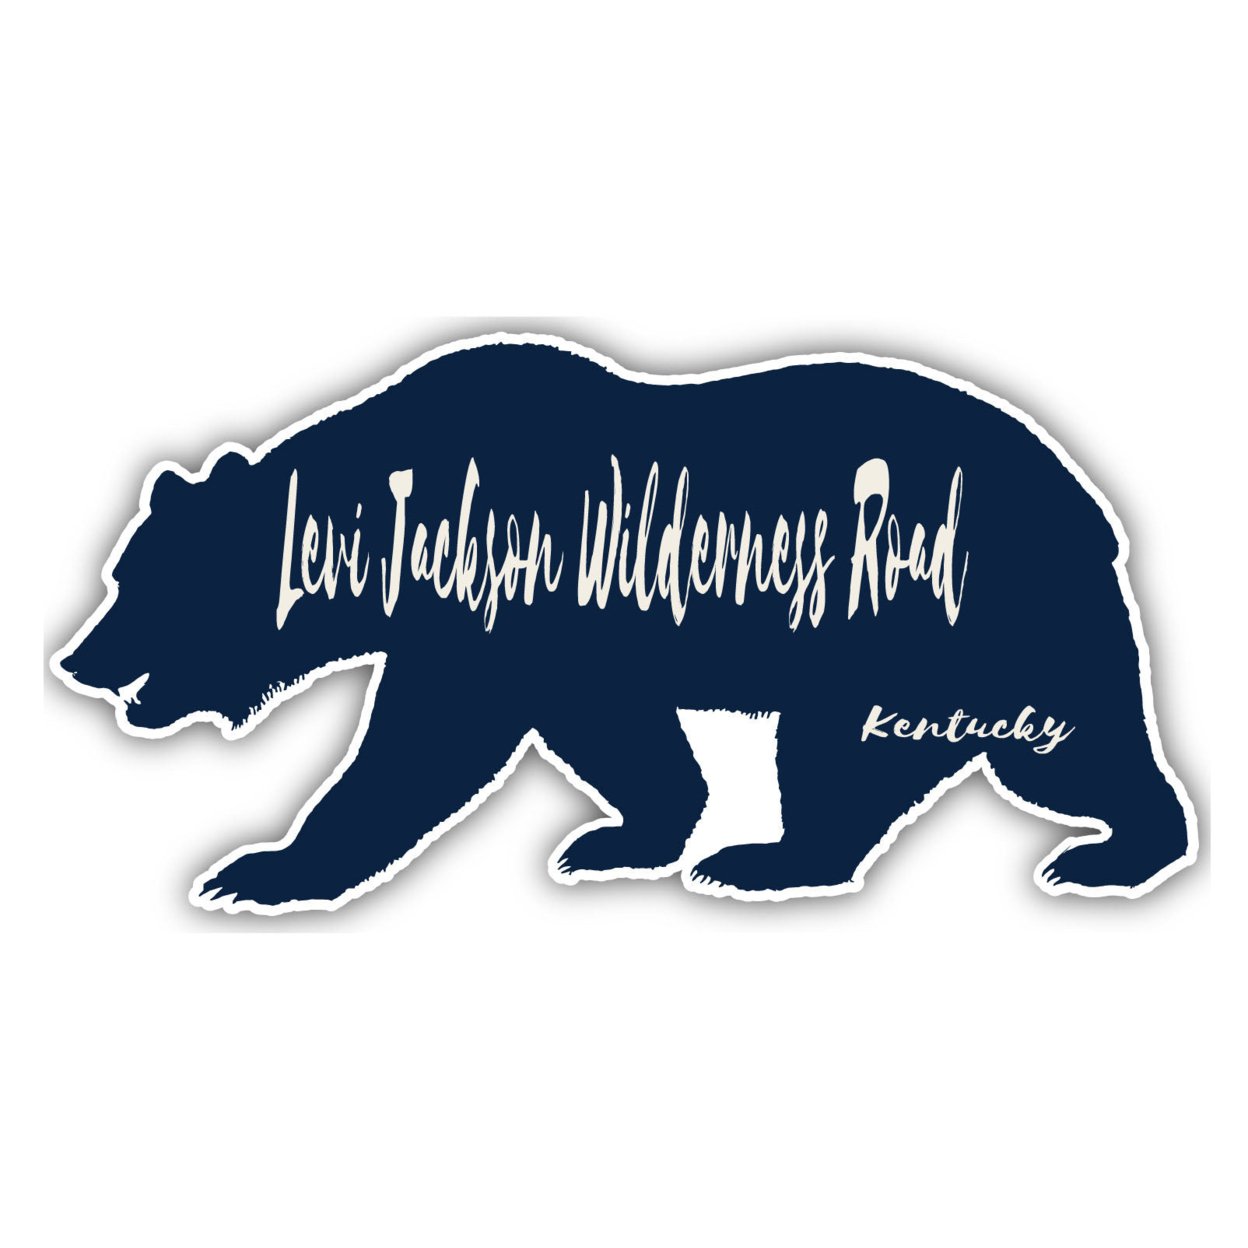 Levi Jackson Wilderness Road Kentucky Souvenir Decorative Stickers (Choose Theme And Size) - 2-Inch, Bear